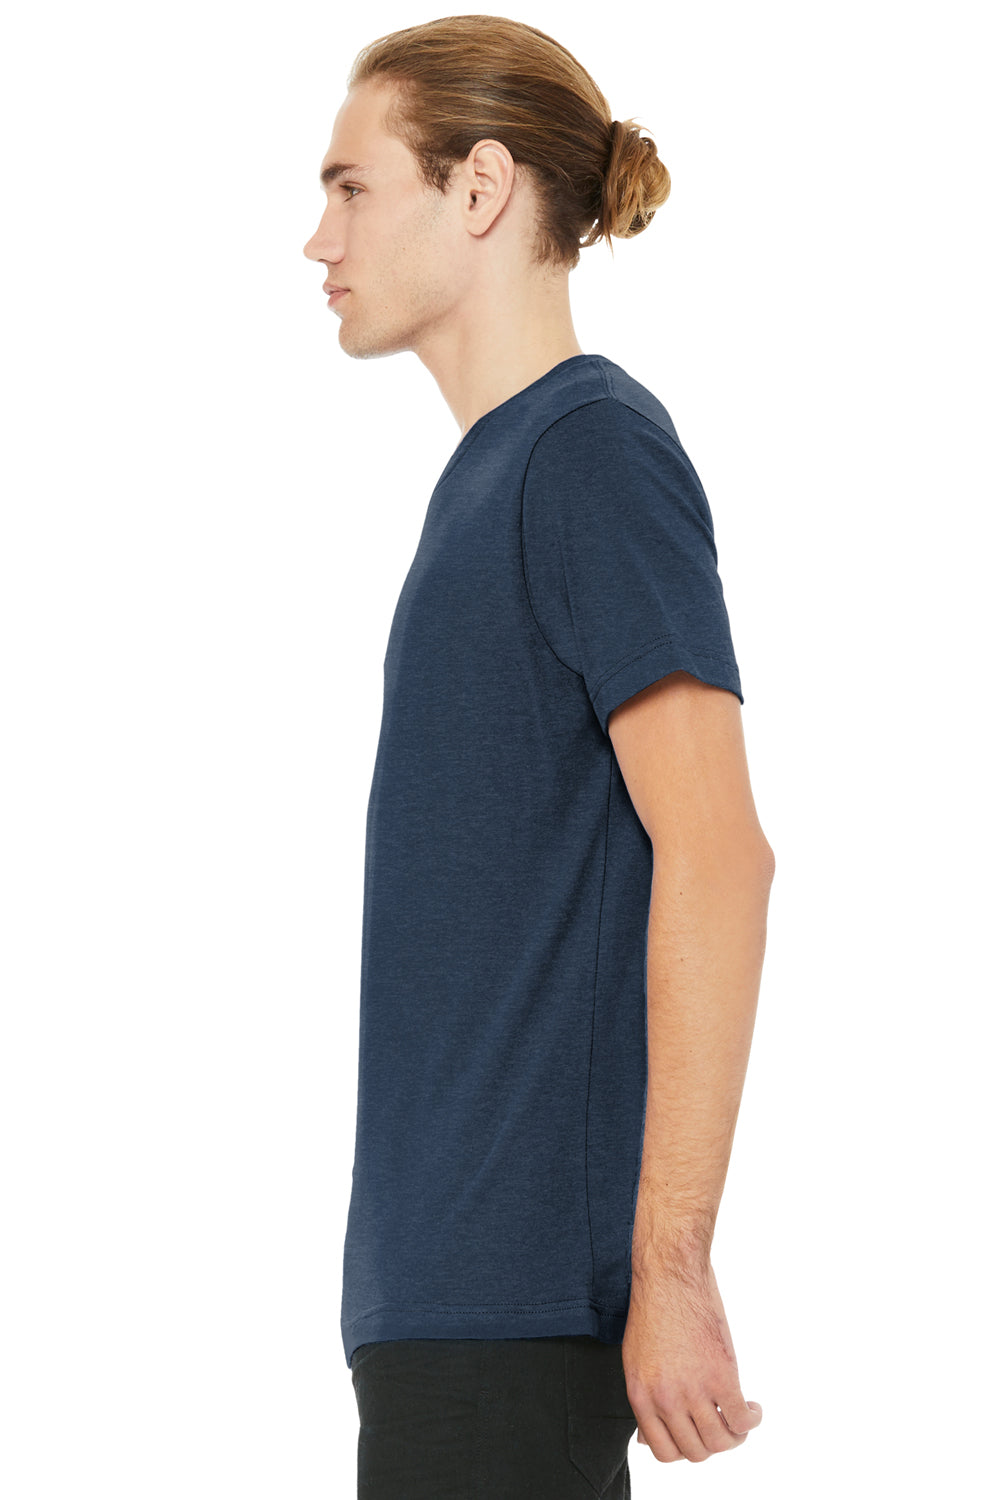 Bella + Canvas BC3005CVC Mens CVC Short Sleeve V-Neck T-Shirt Heather Navy Blue Model Side